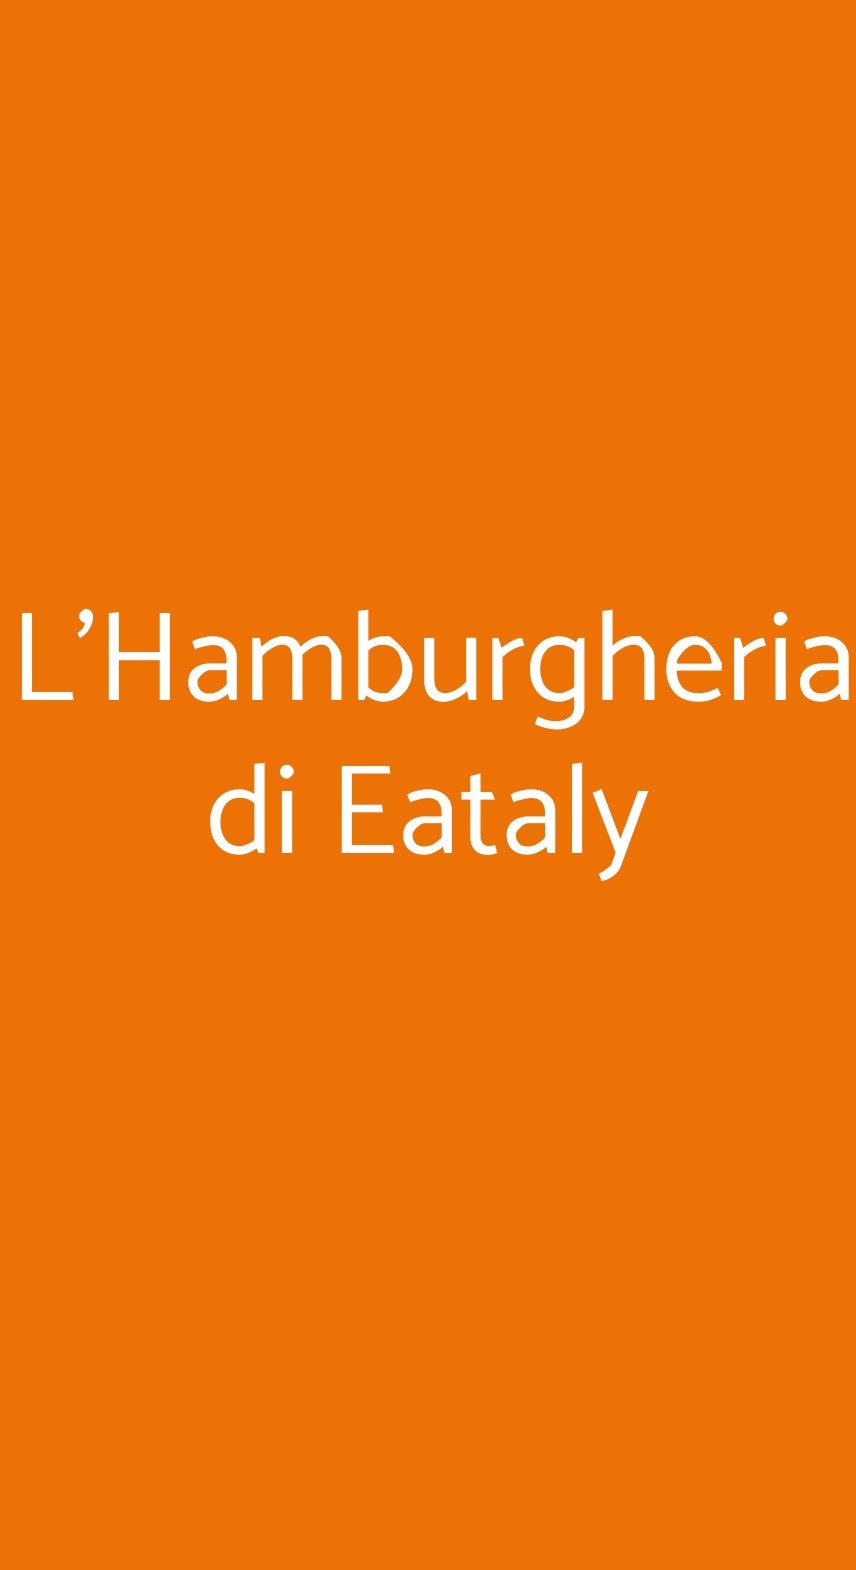 L’Hamburgheria di Eataly Milano menù 1 pagina